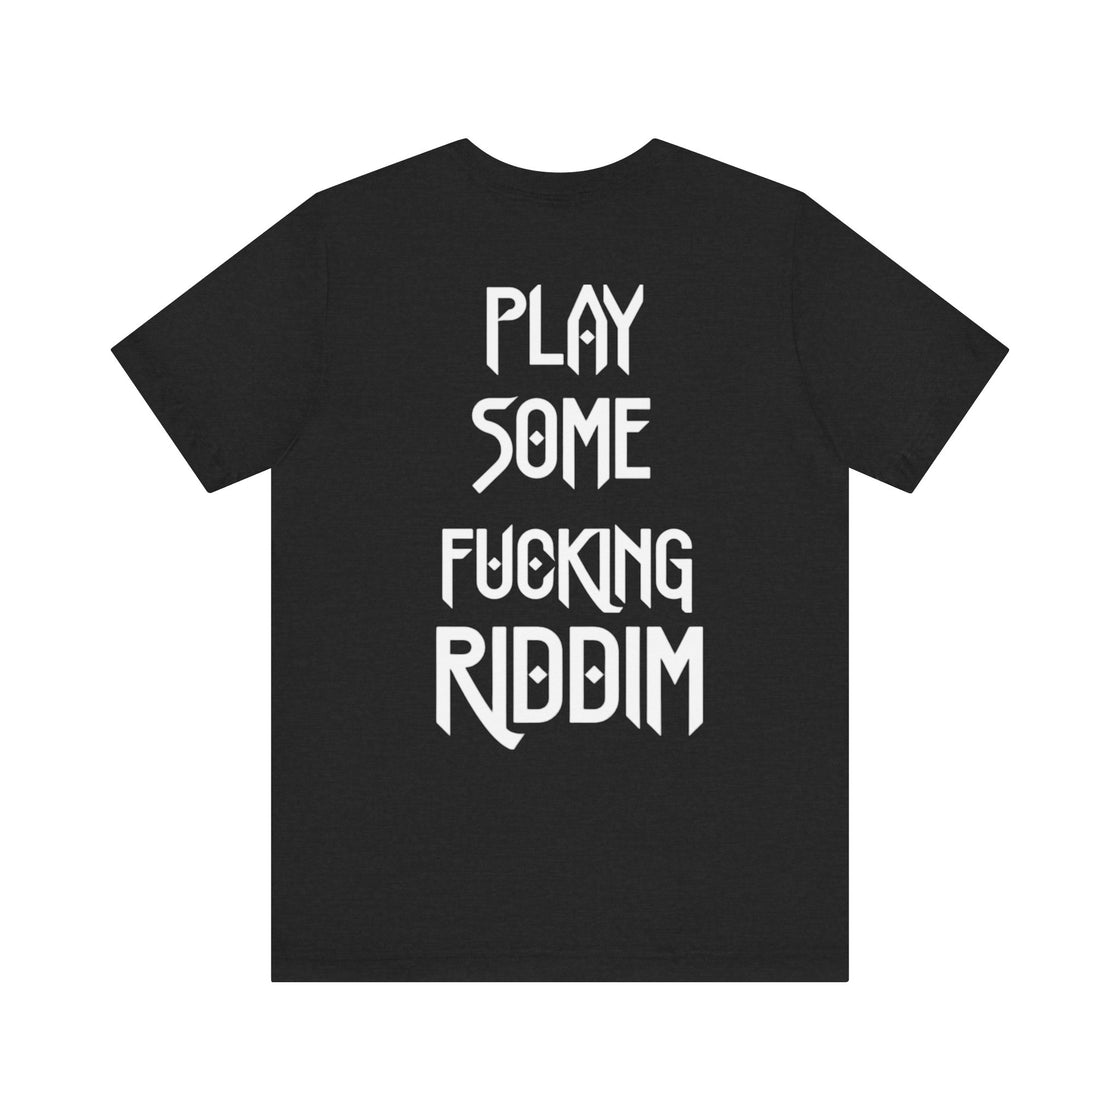 Play Some Riddim T-Shirt - Rave T-shirt, Music Festival T-shirt, Rave Shirt For Men, EDM Shirt, Rave Merch, Unisex Rave Shirt